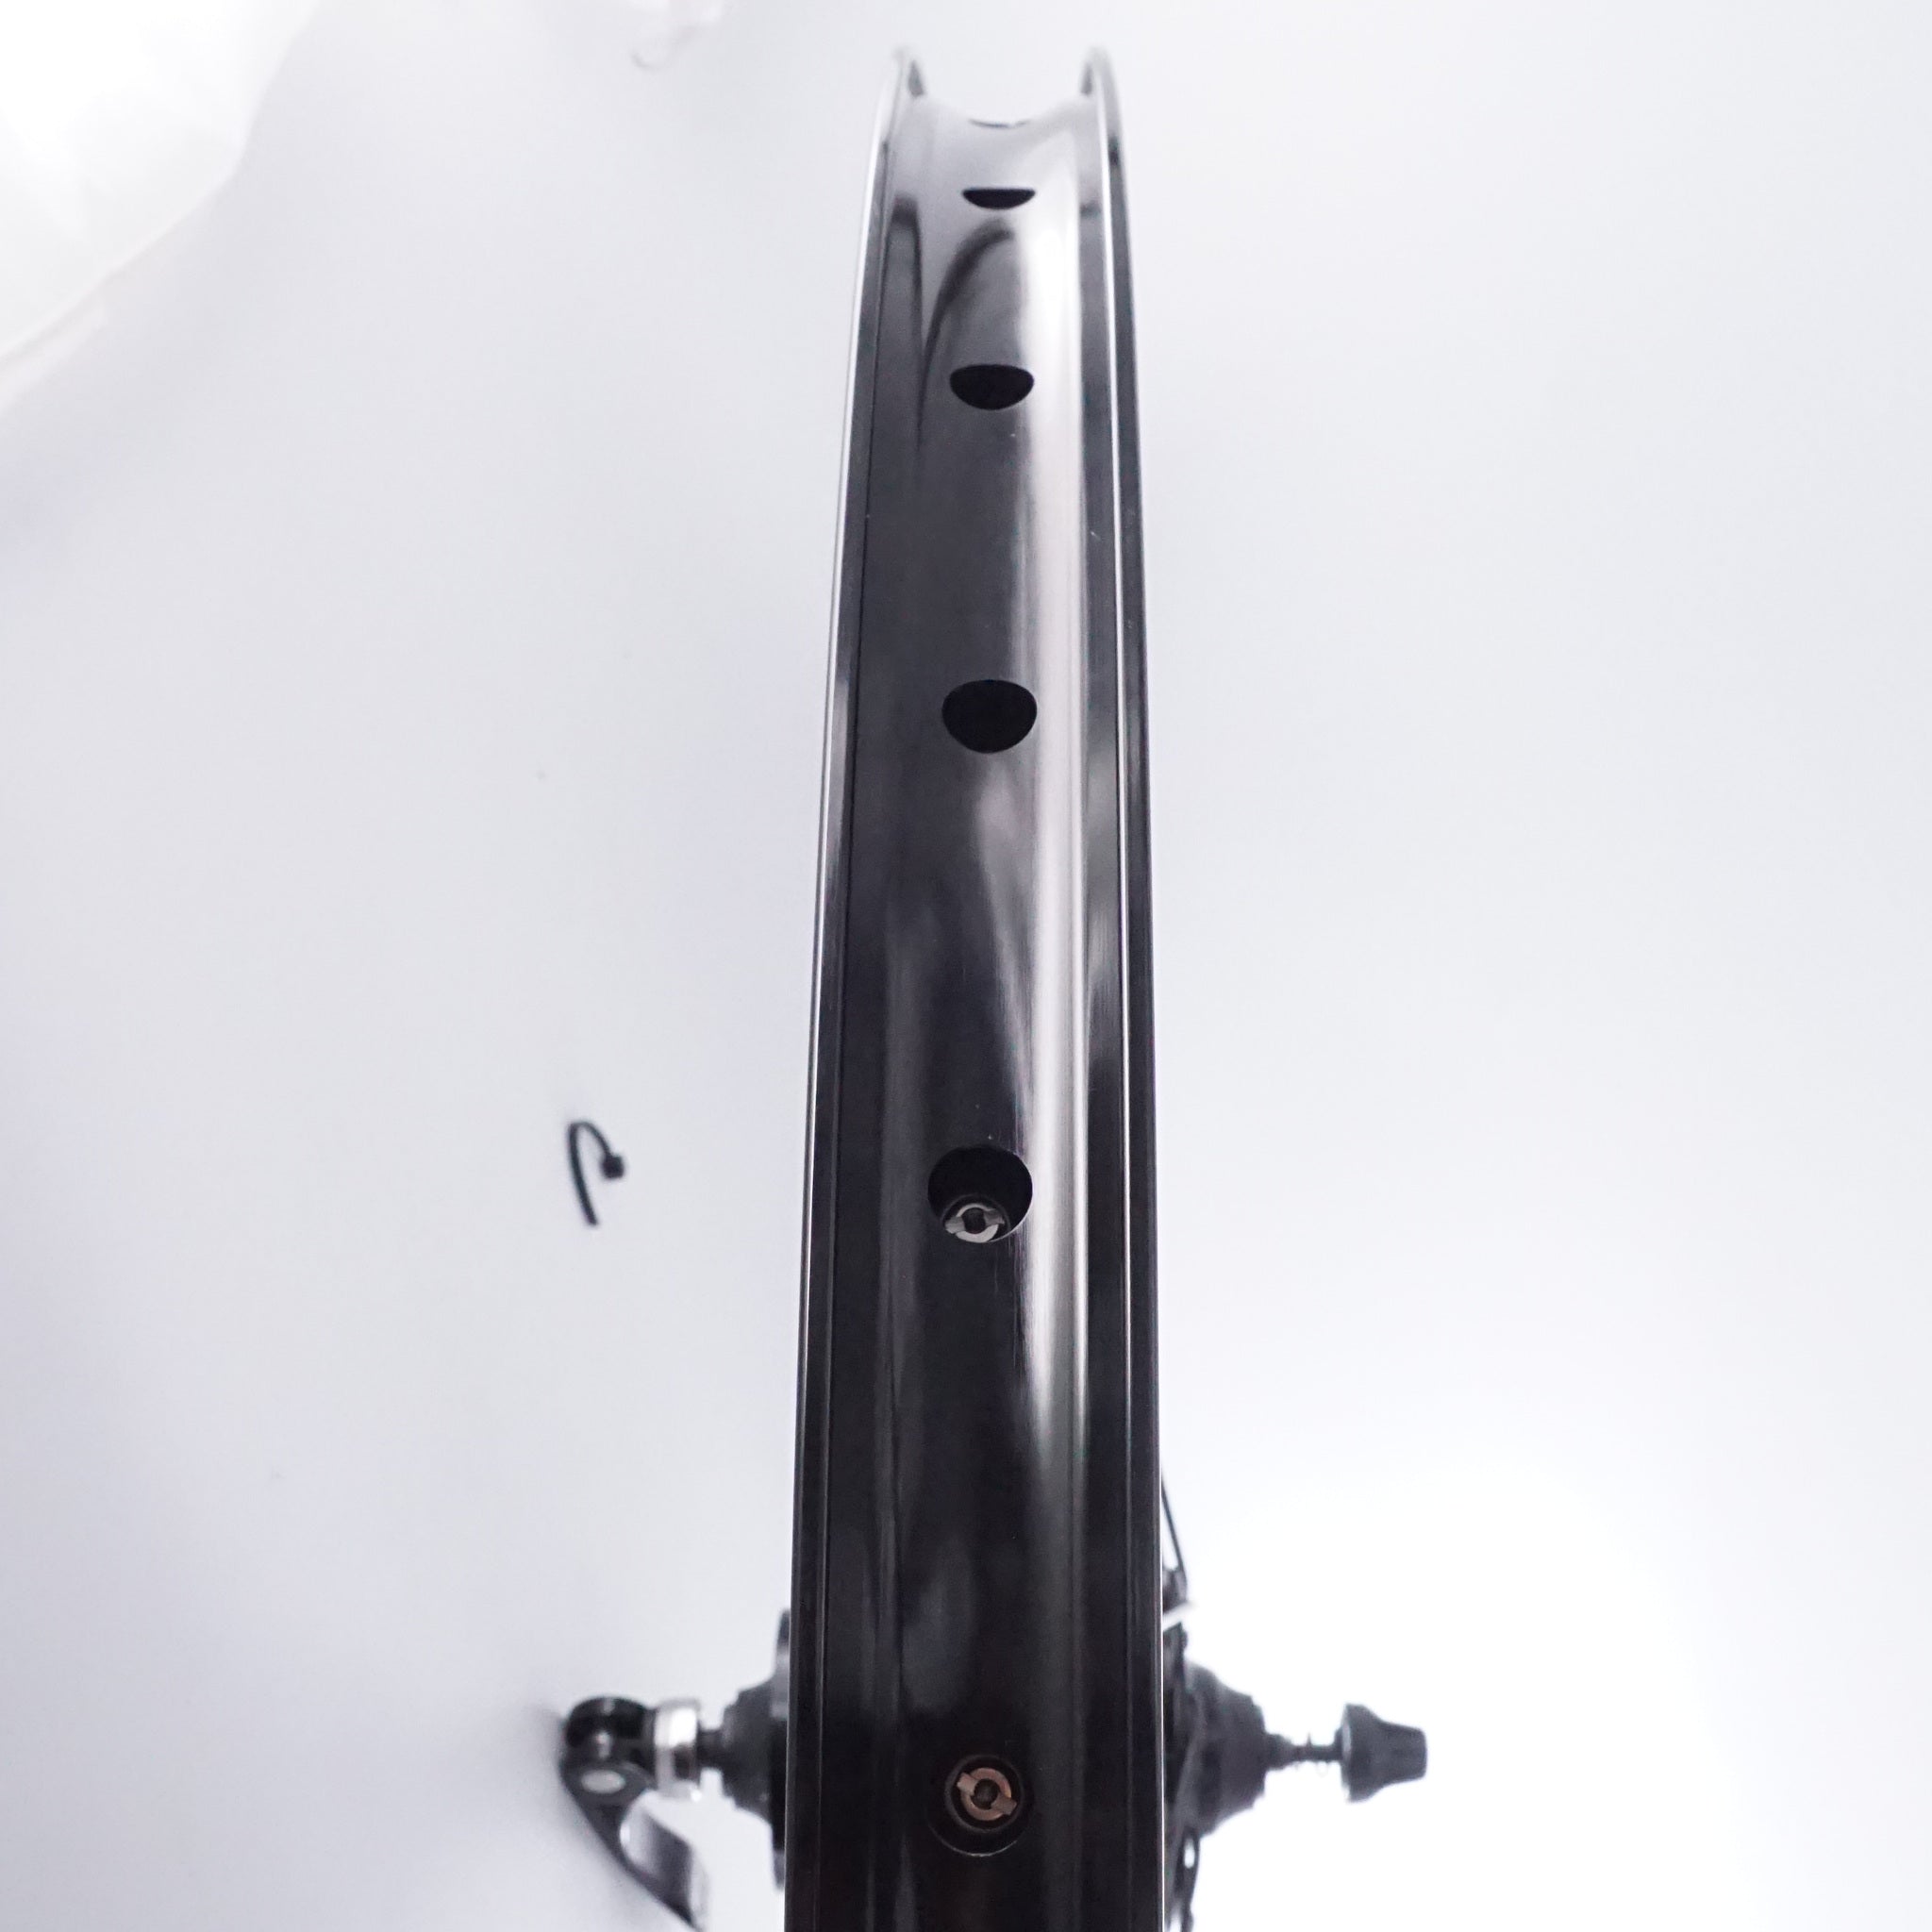 Sun Ringle MTX33 / Shimano 26" Black Alloy Disc Wheelset